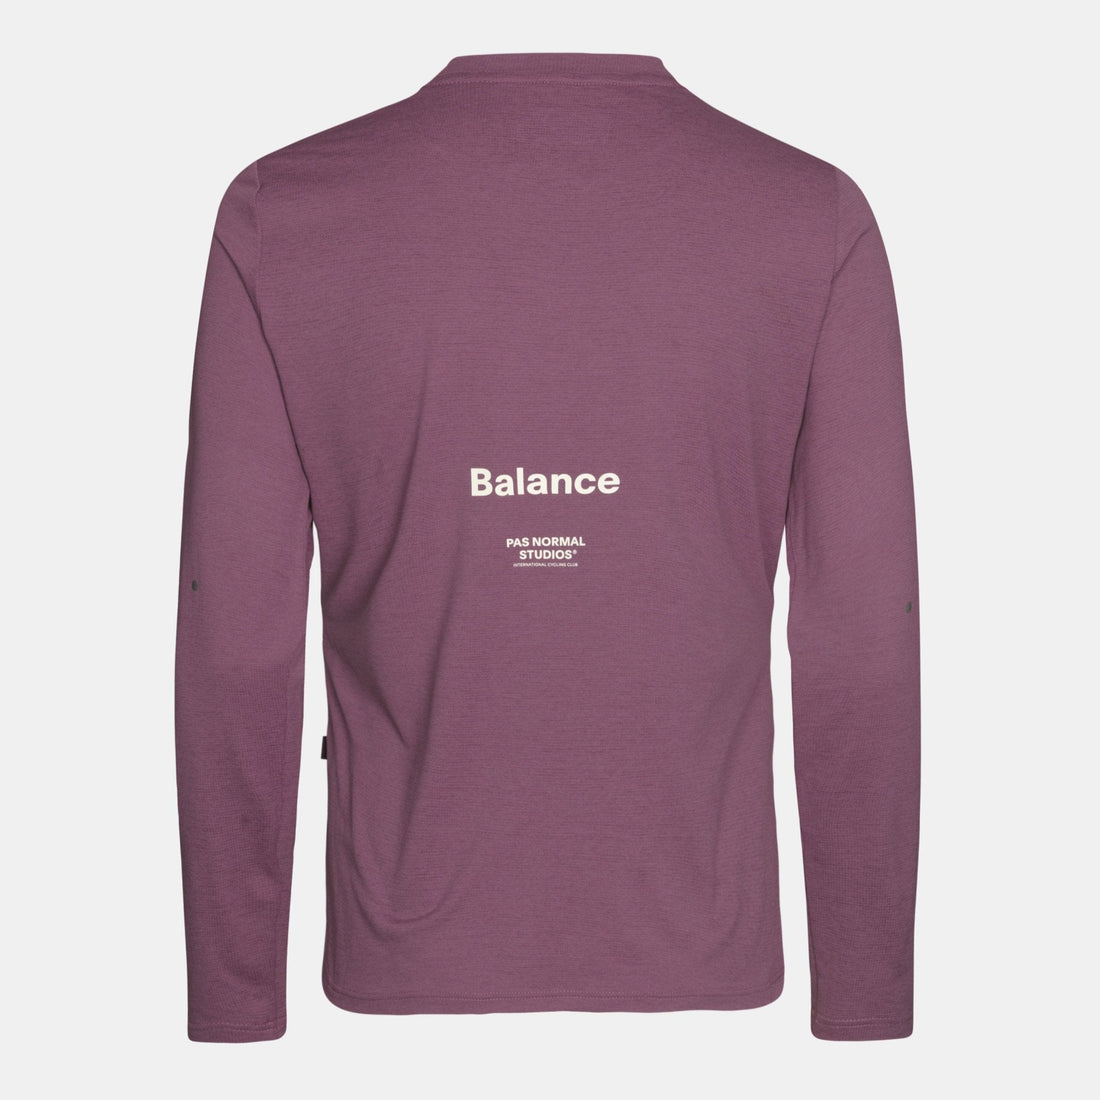 Pas Normal Studios Womens Balance Long Sleeve T-shirt - Mauve